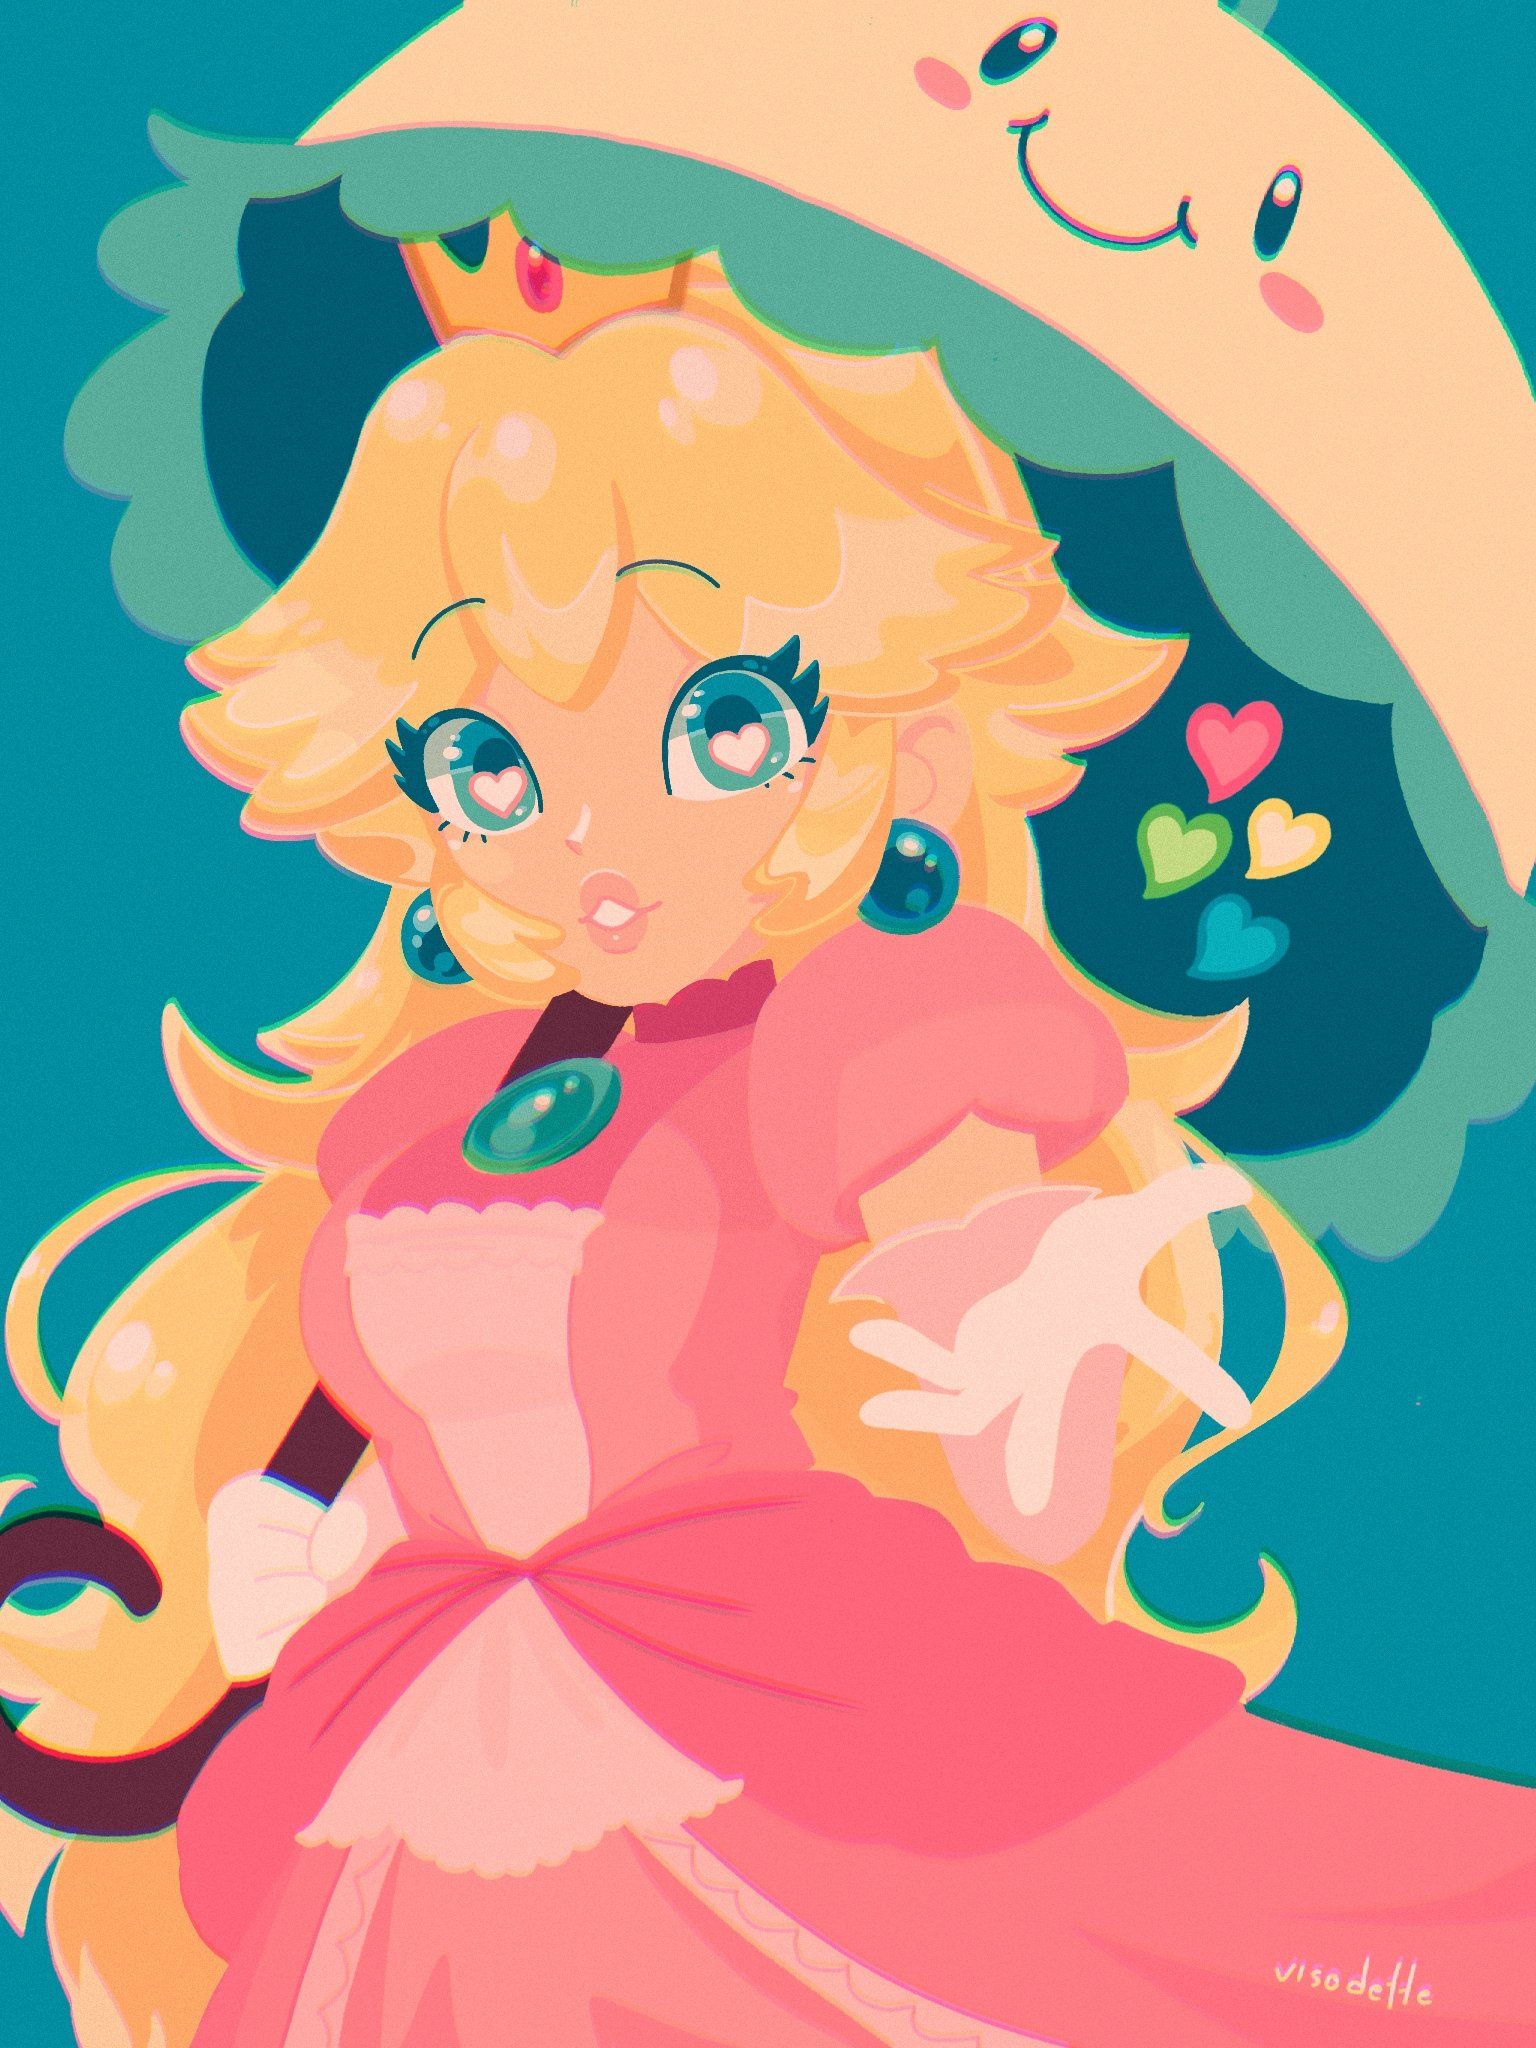 A girl with long hair and an umbrella - Princess Peach